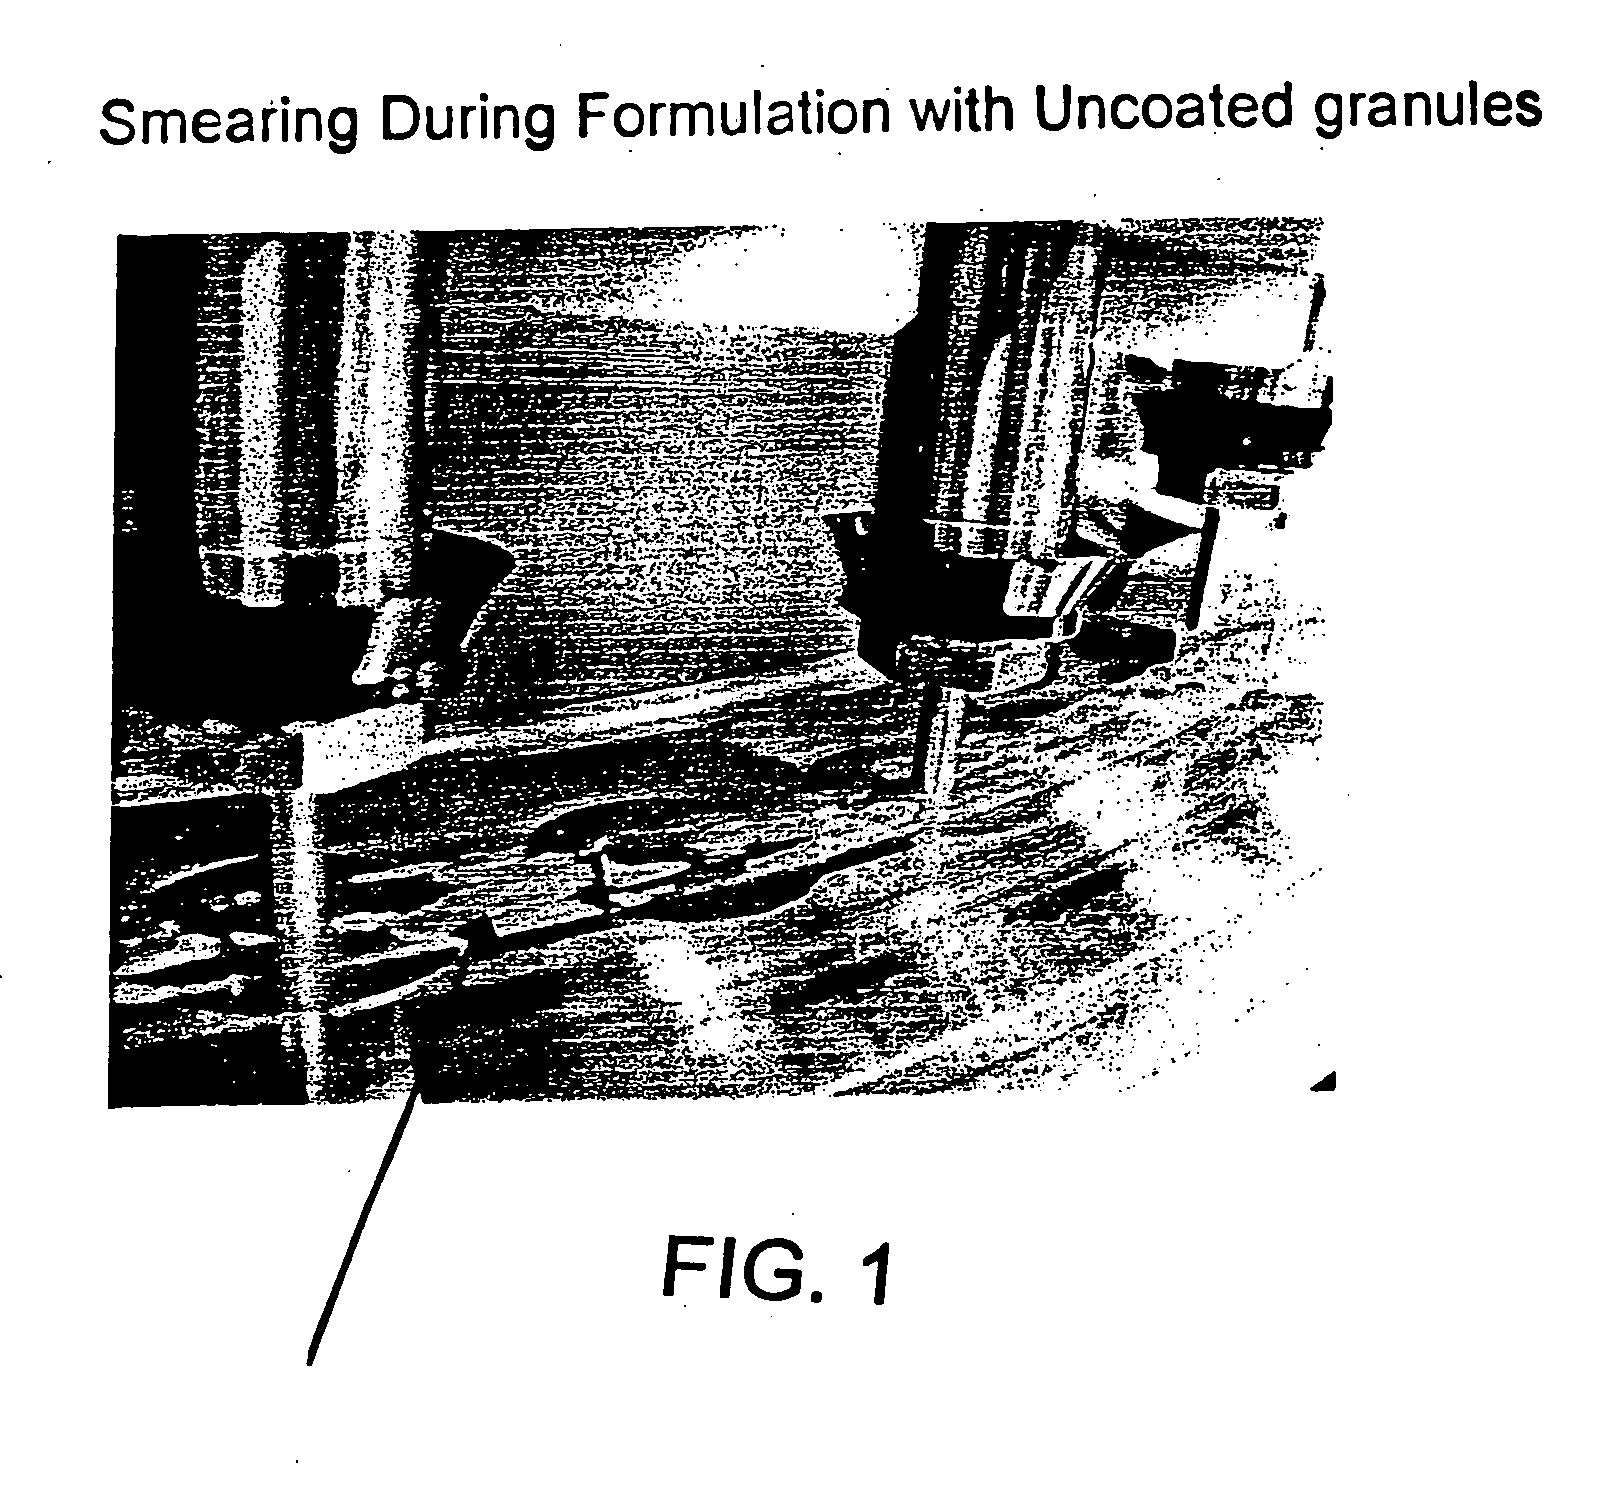 Drug granule coatings that impart smear resistance during mechanical compression